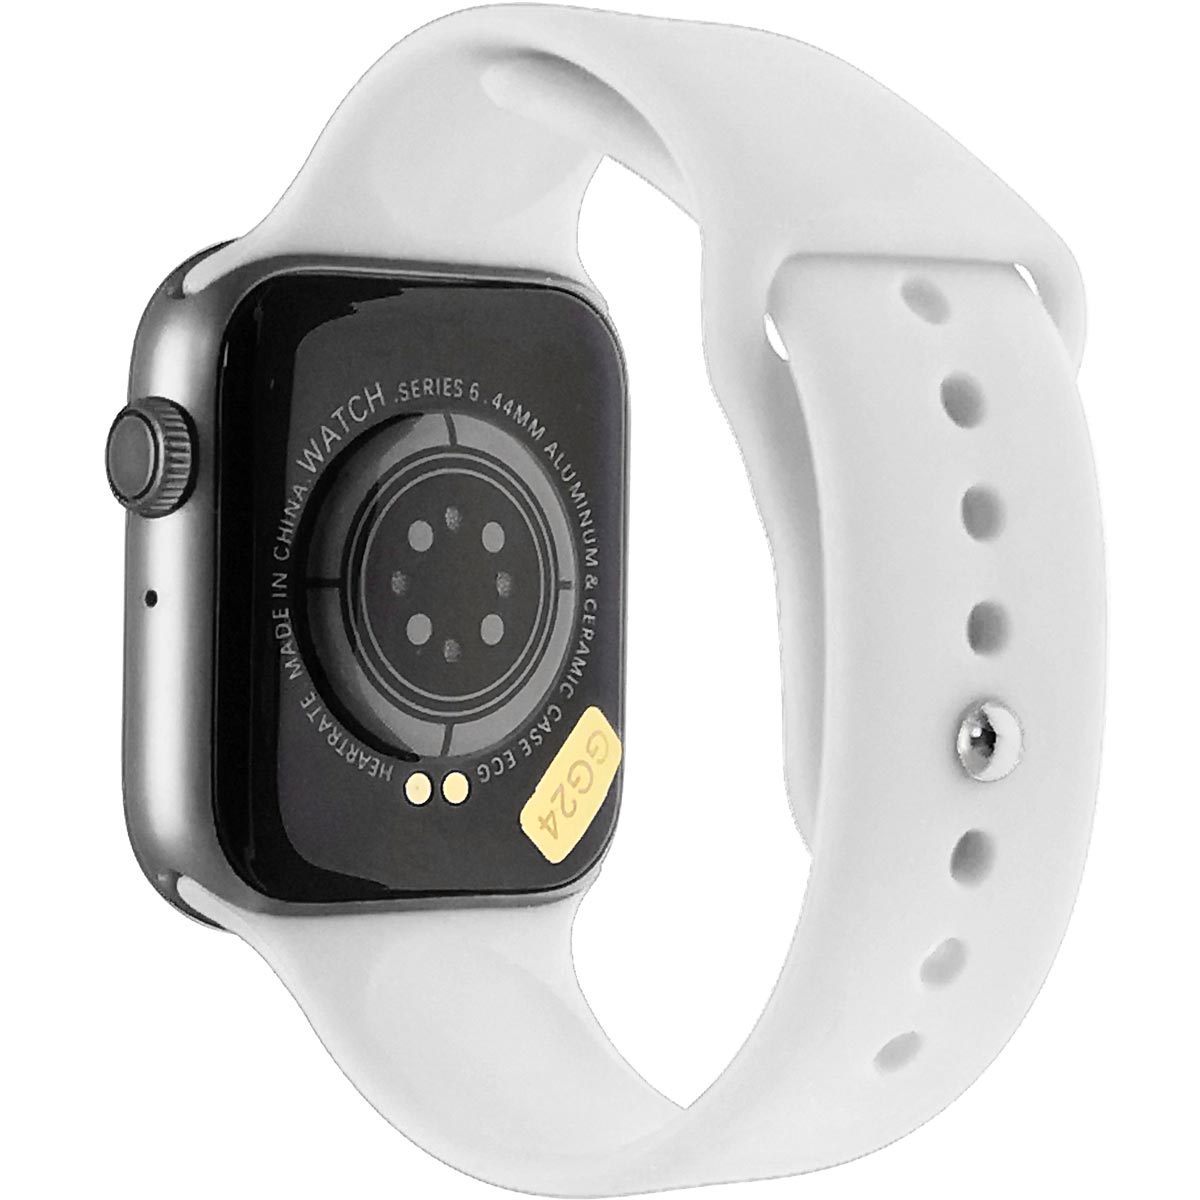 Смарт-часы Smart Watch AK76, Bluetooth, шагомер, датчик пульса, цвет серебристый